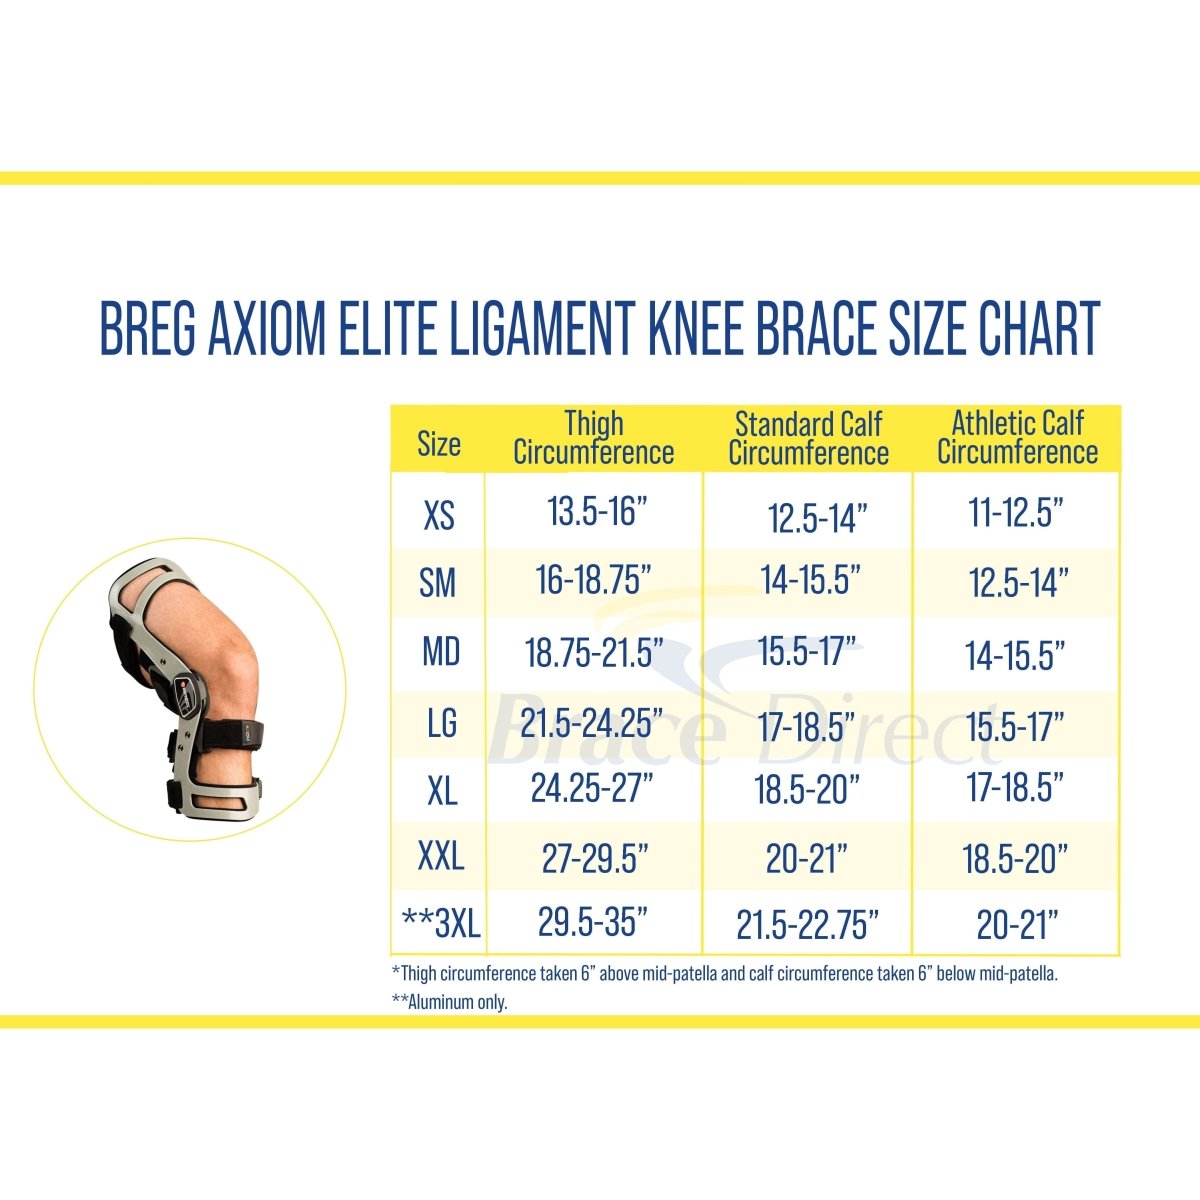 Breg Axiom Elite Combined Instability, Aluminum Ligament Knee Brace - PK524101 - Brace Direct